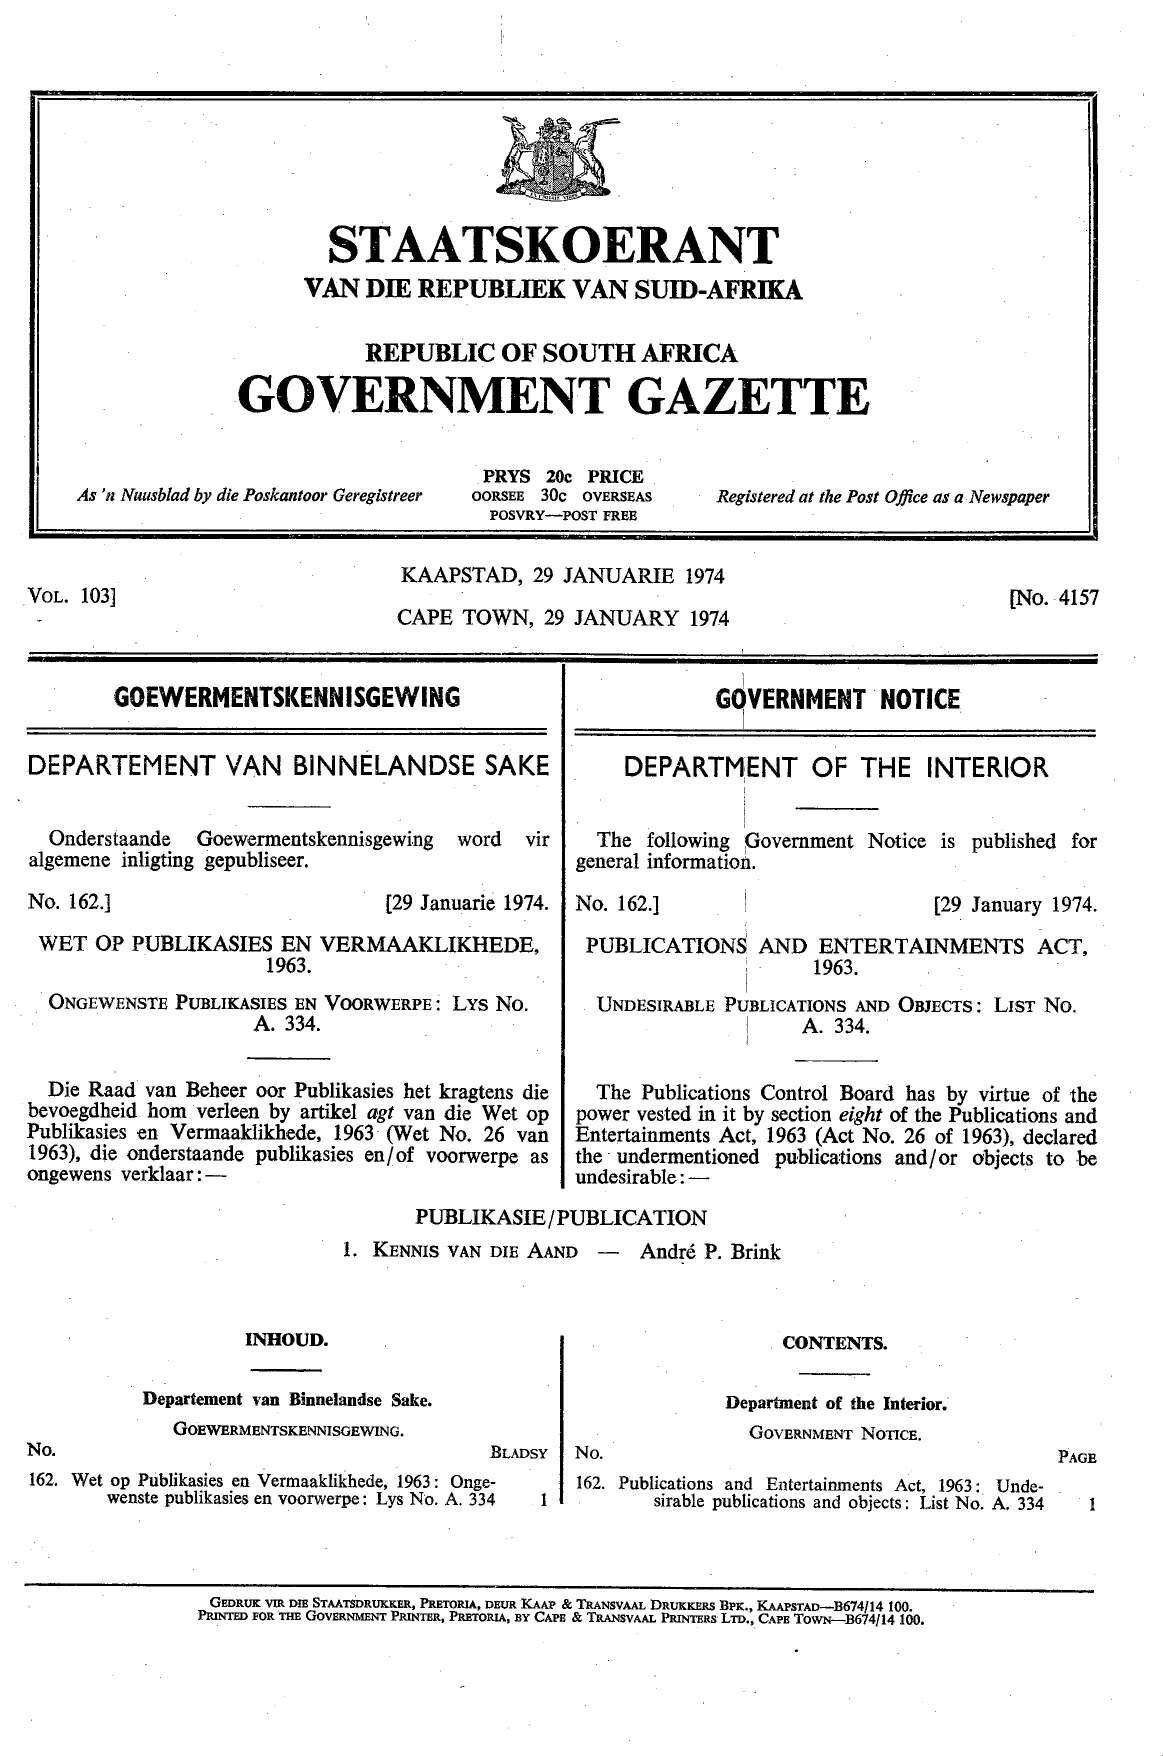 government gazette